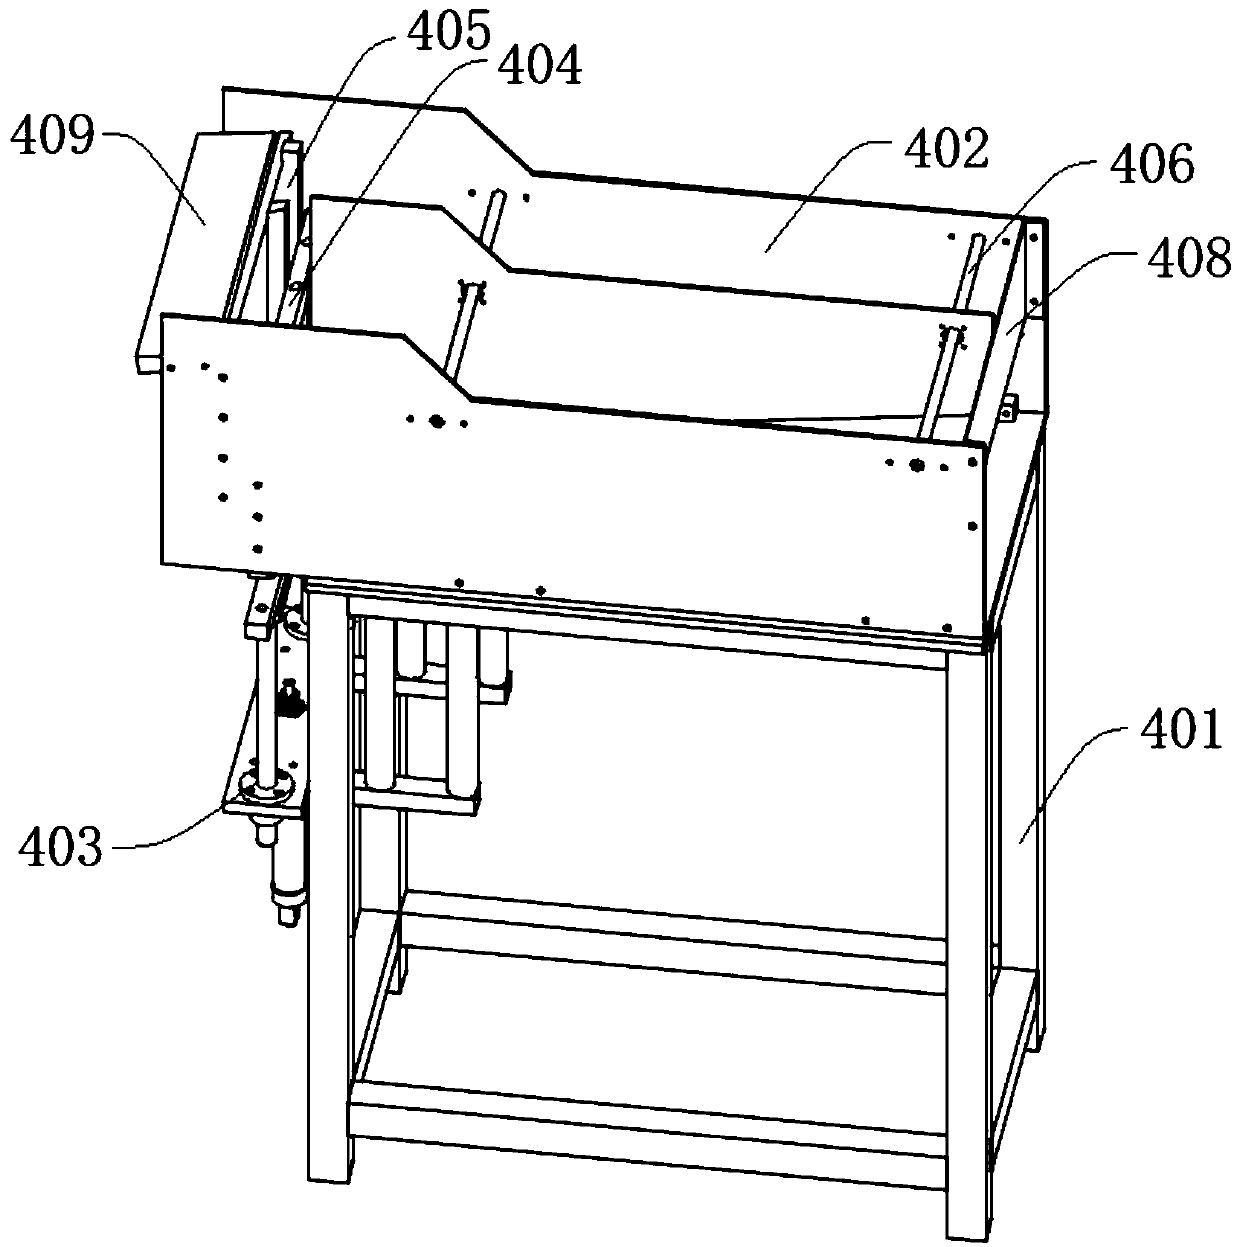 Air cylinder assembling equipment and assembling method